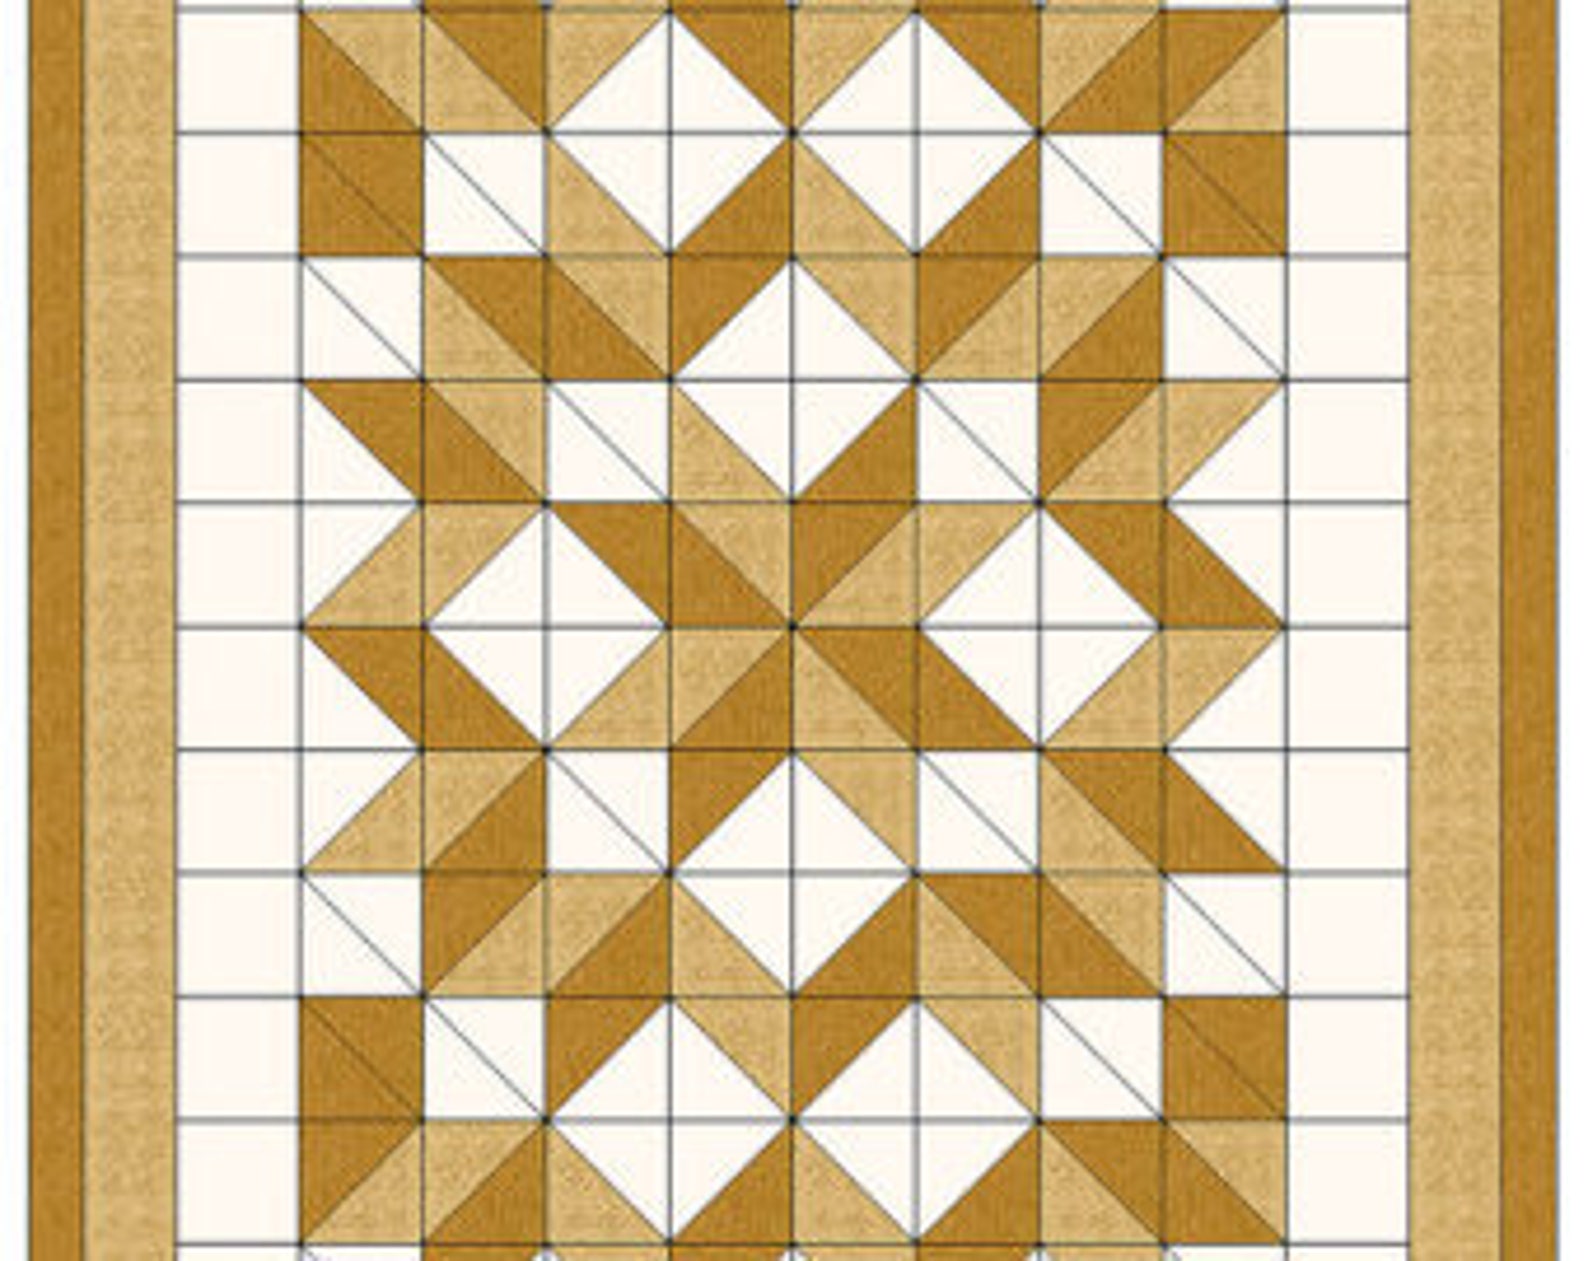 Carpenters Star quilt pattern pdf instant download load | Etsy